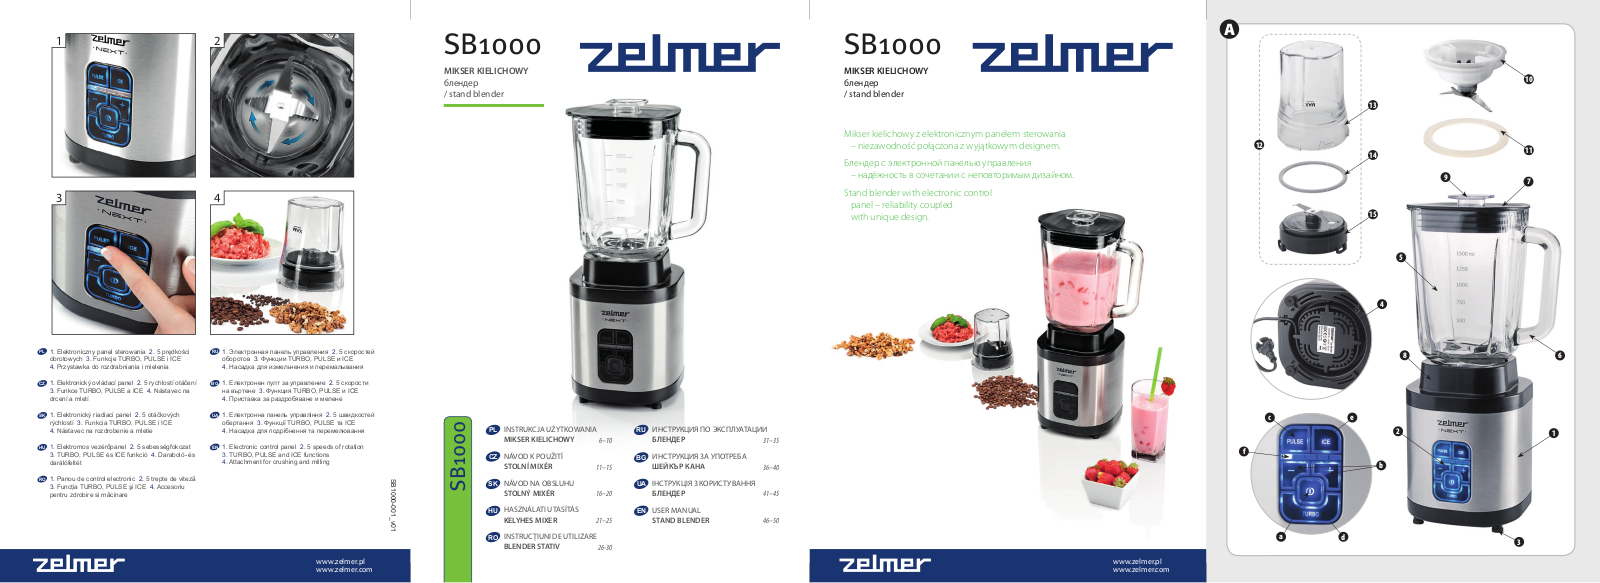 Zelmer SB1000 User Manual